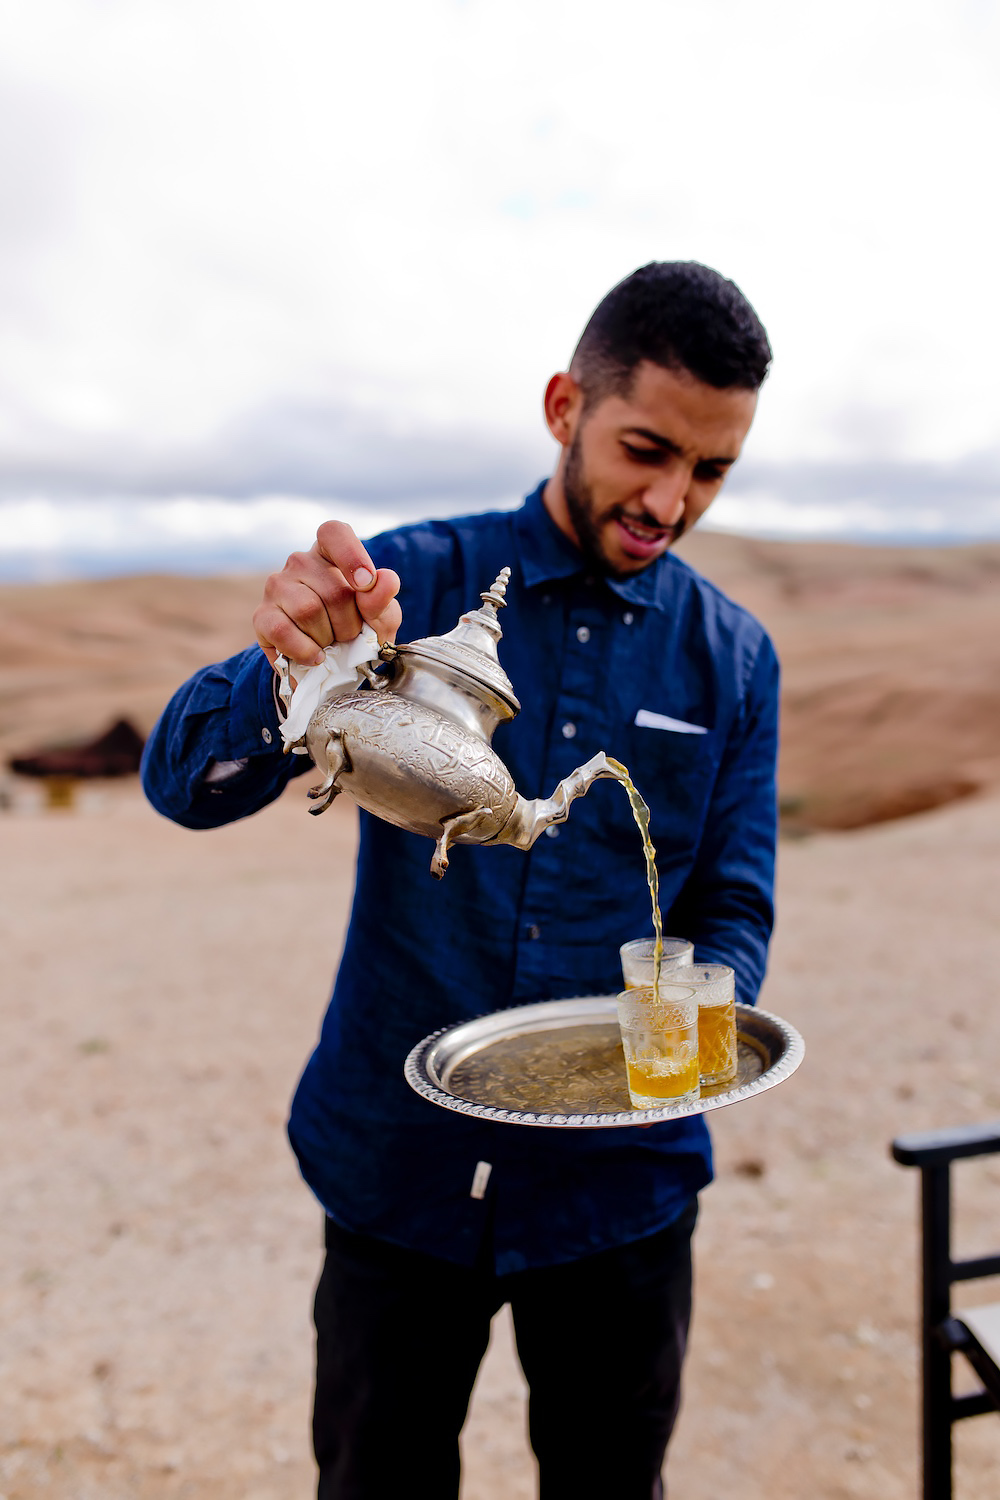 scarabeo camp review erfahrung wüstencamp marrakesch